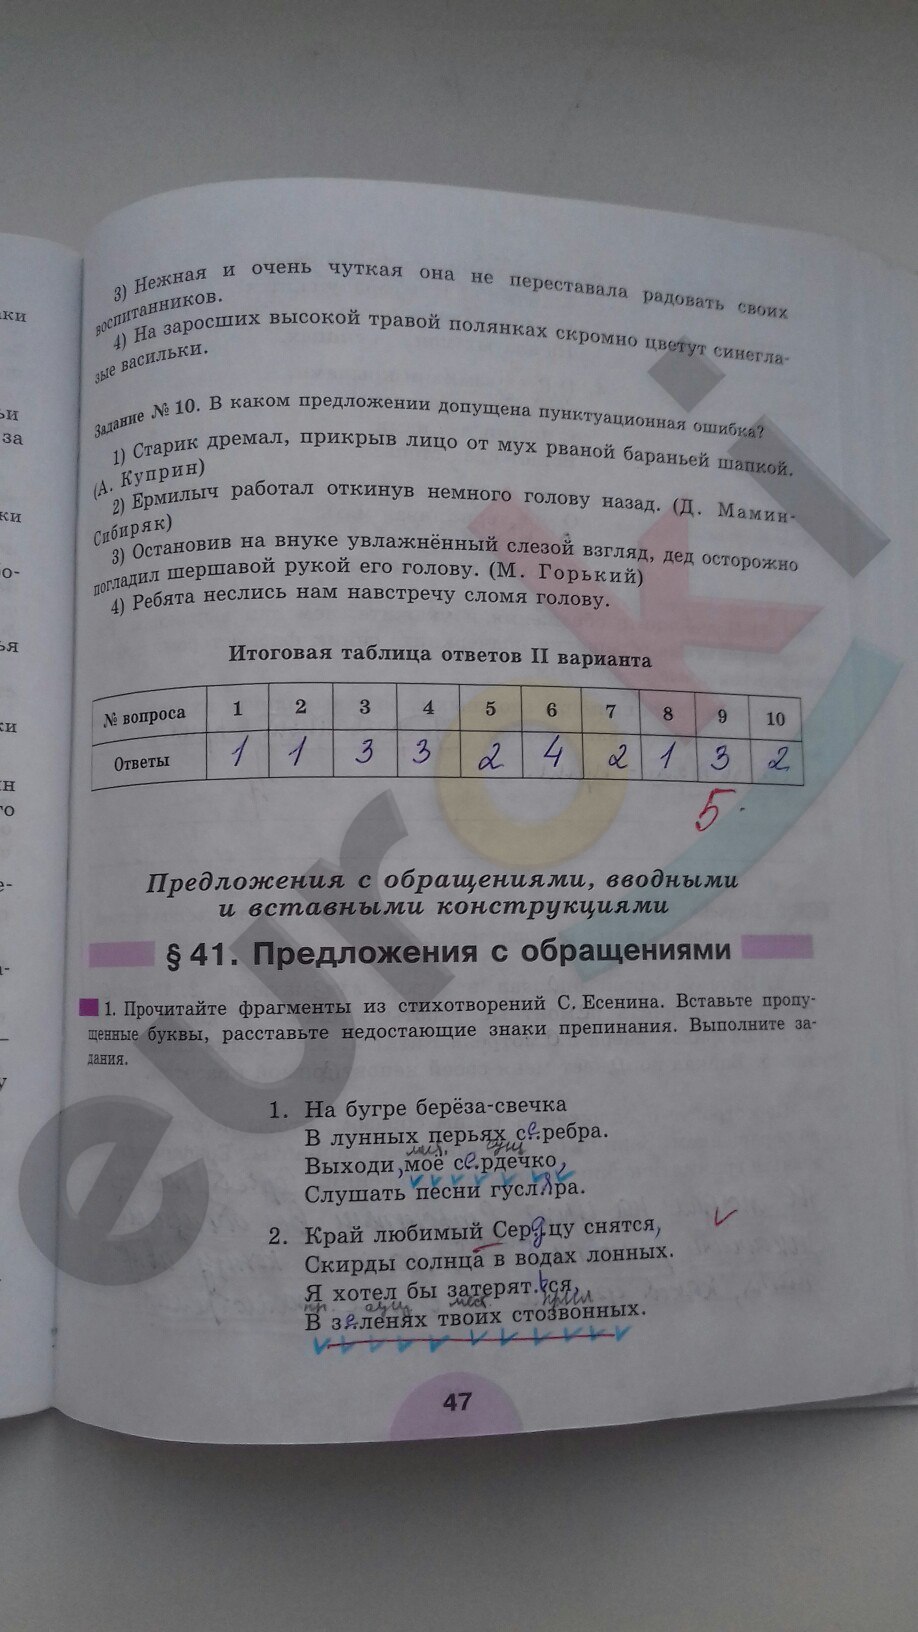 гдз 8 класс рабочая тетрадь часть 2 страница 47 русский язык Рыбченкова, Александрова